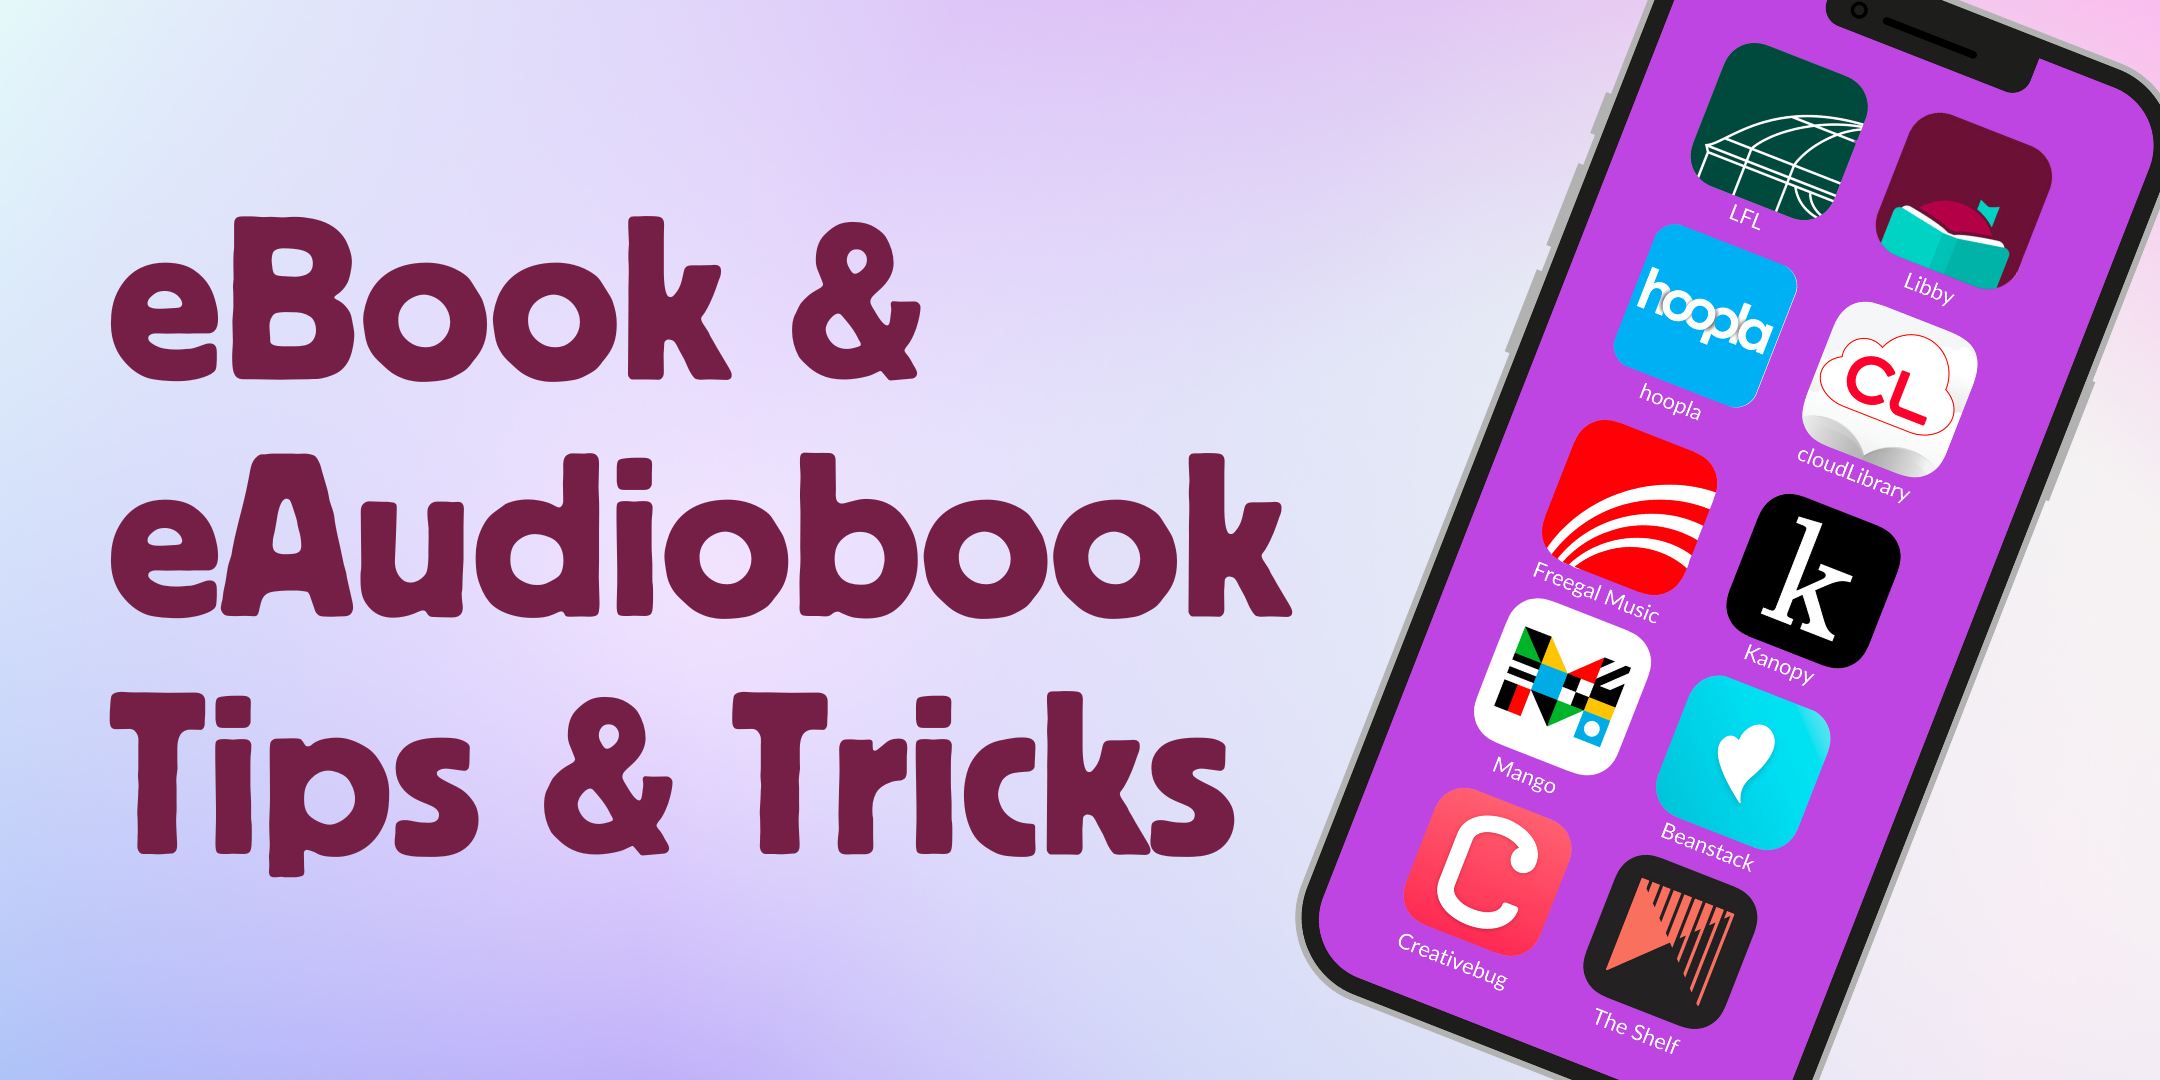 image of "eBook & eAudiobook Tips & Tricks"